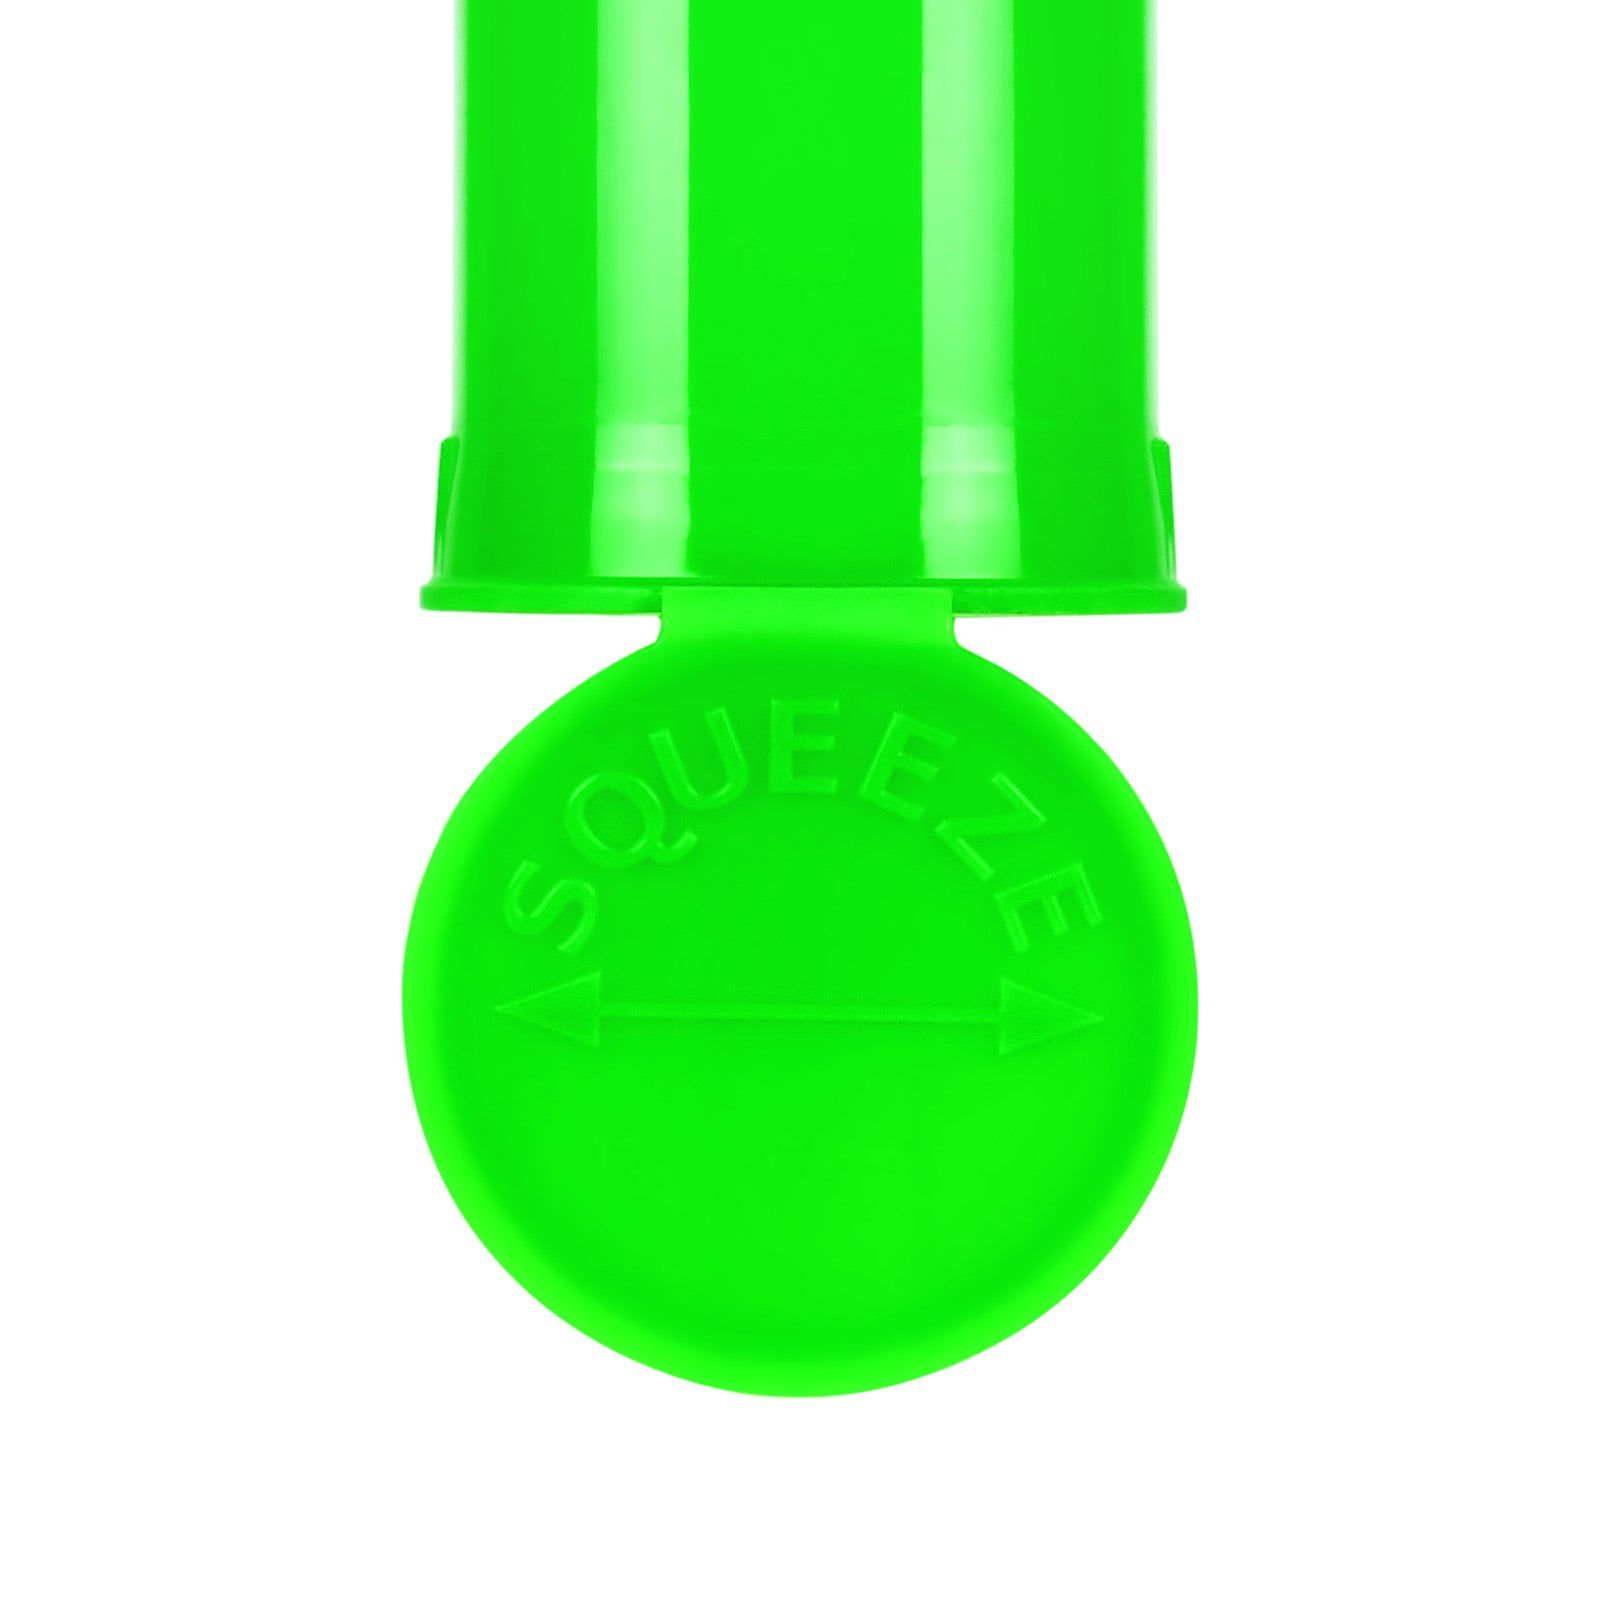 13 Dram Philips Rx Pop Top Opaque Green - 315 Count